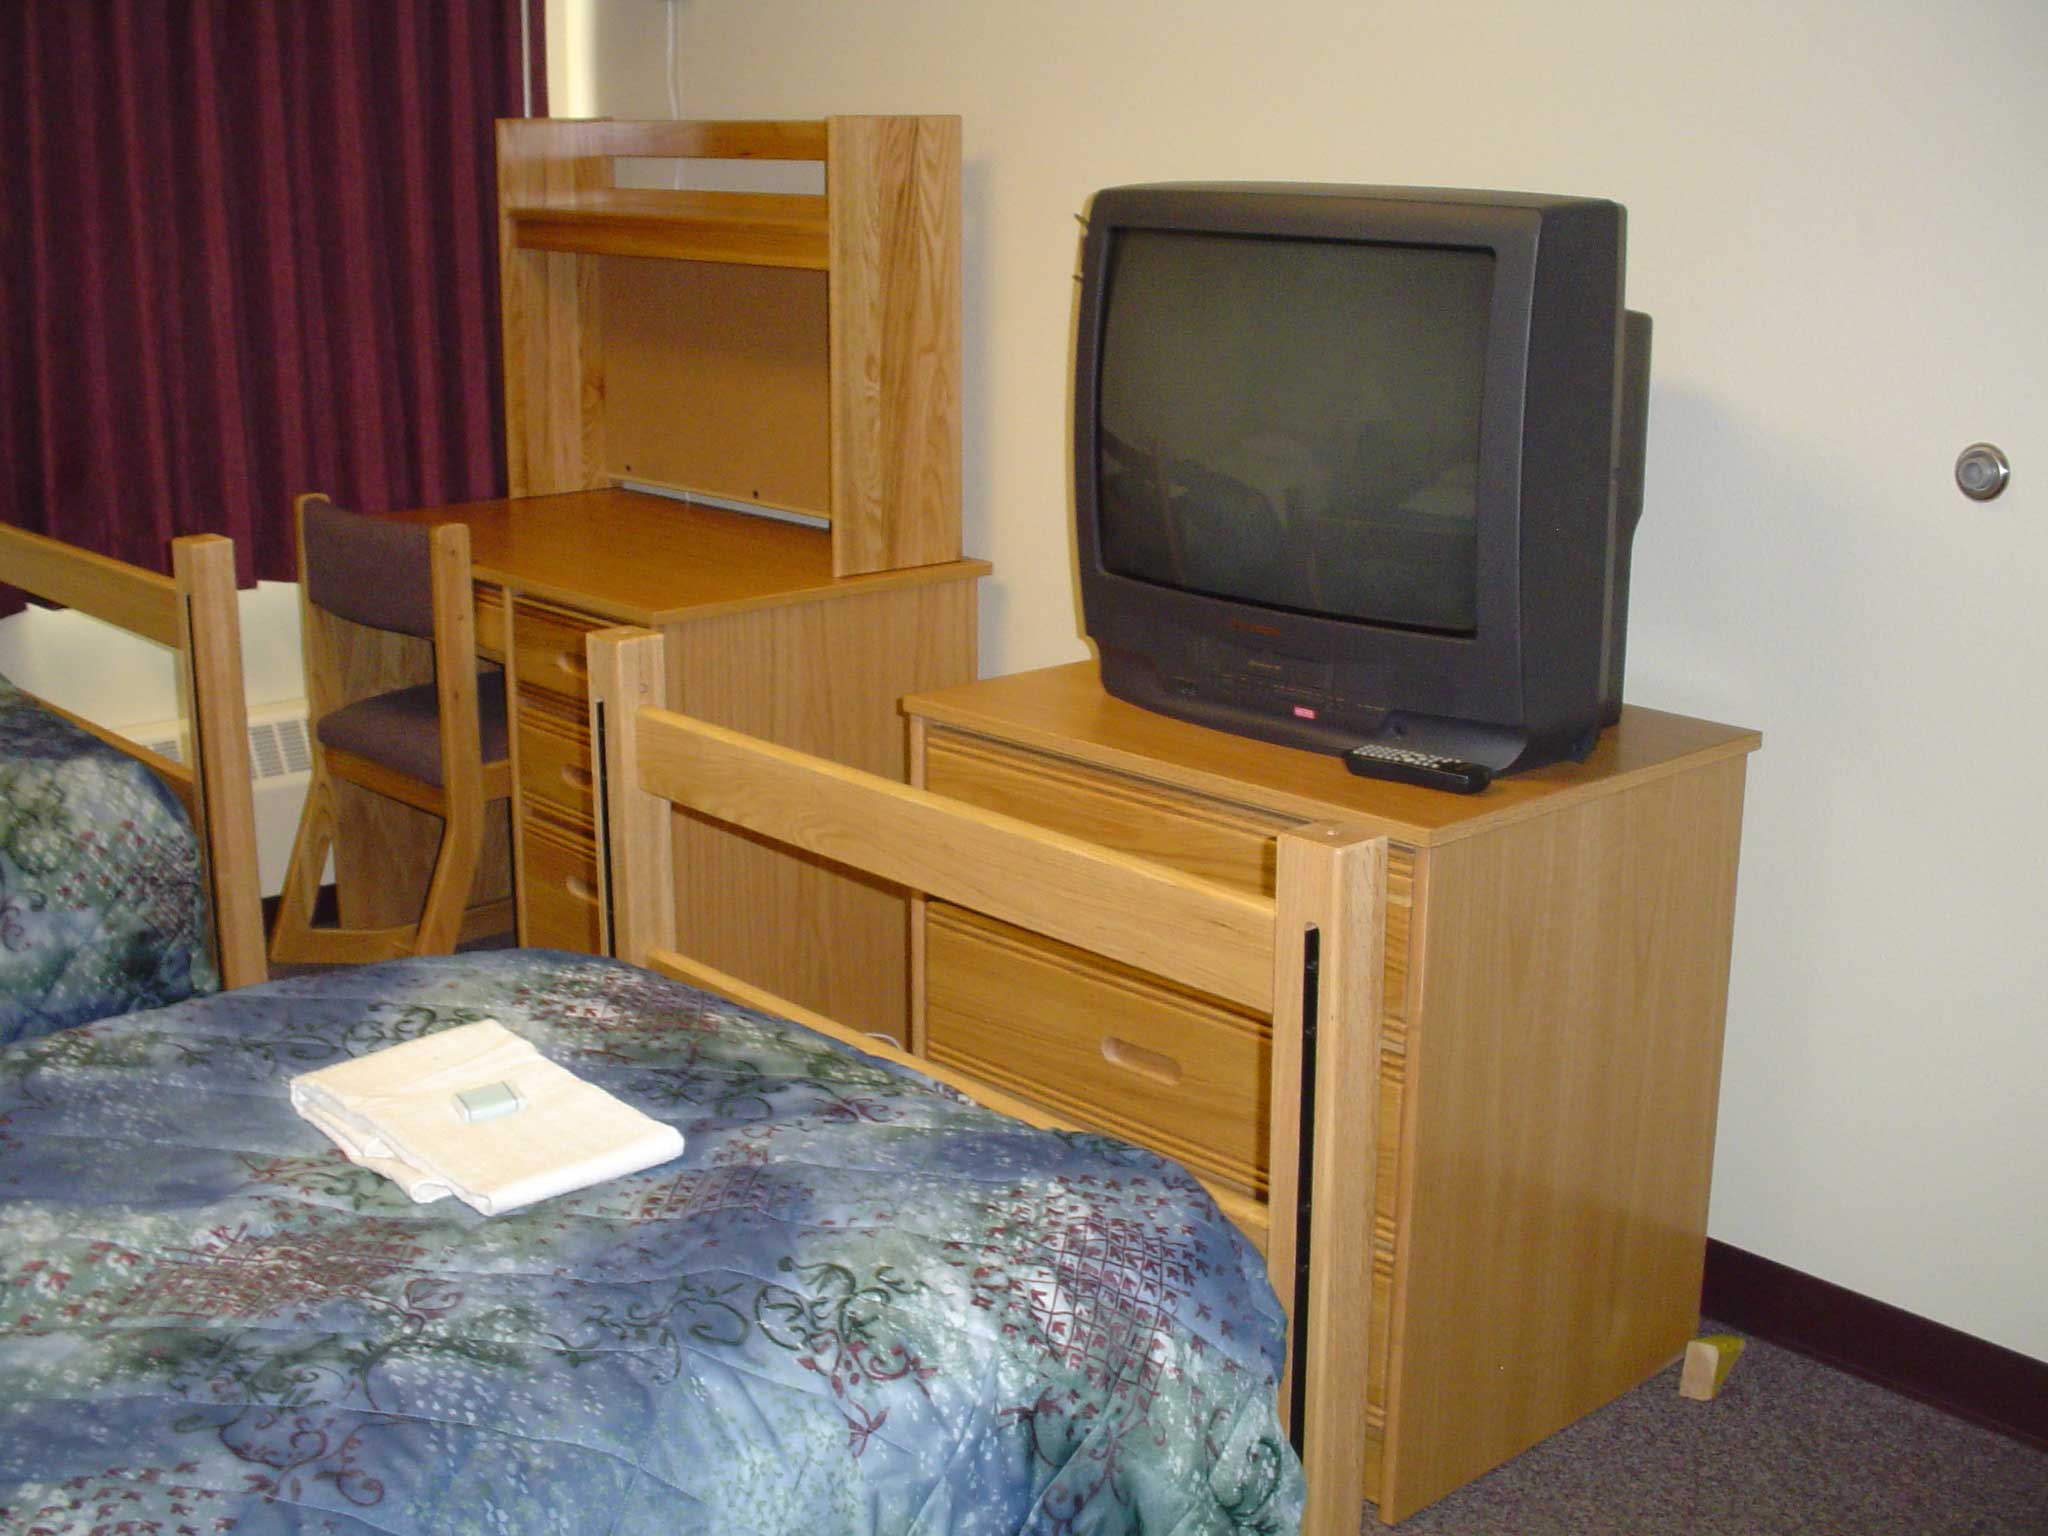 Barracks room desk and TV